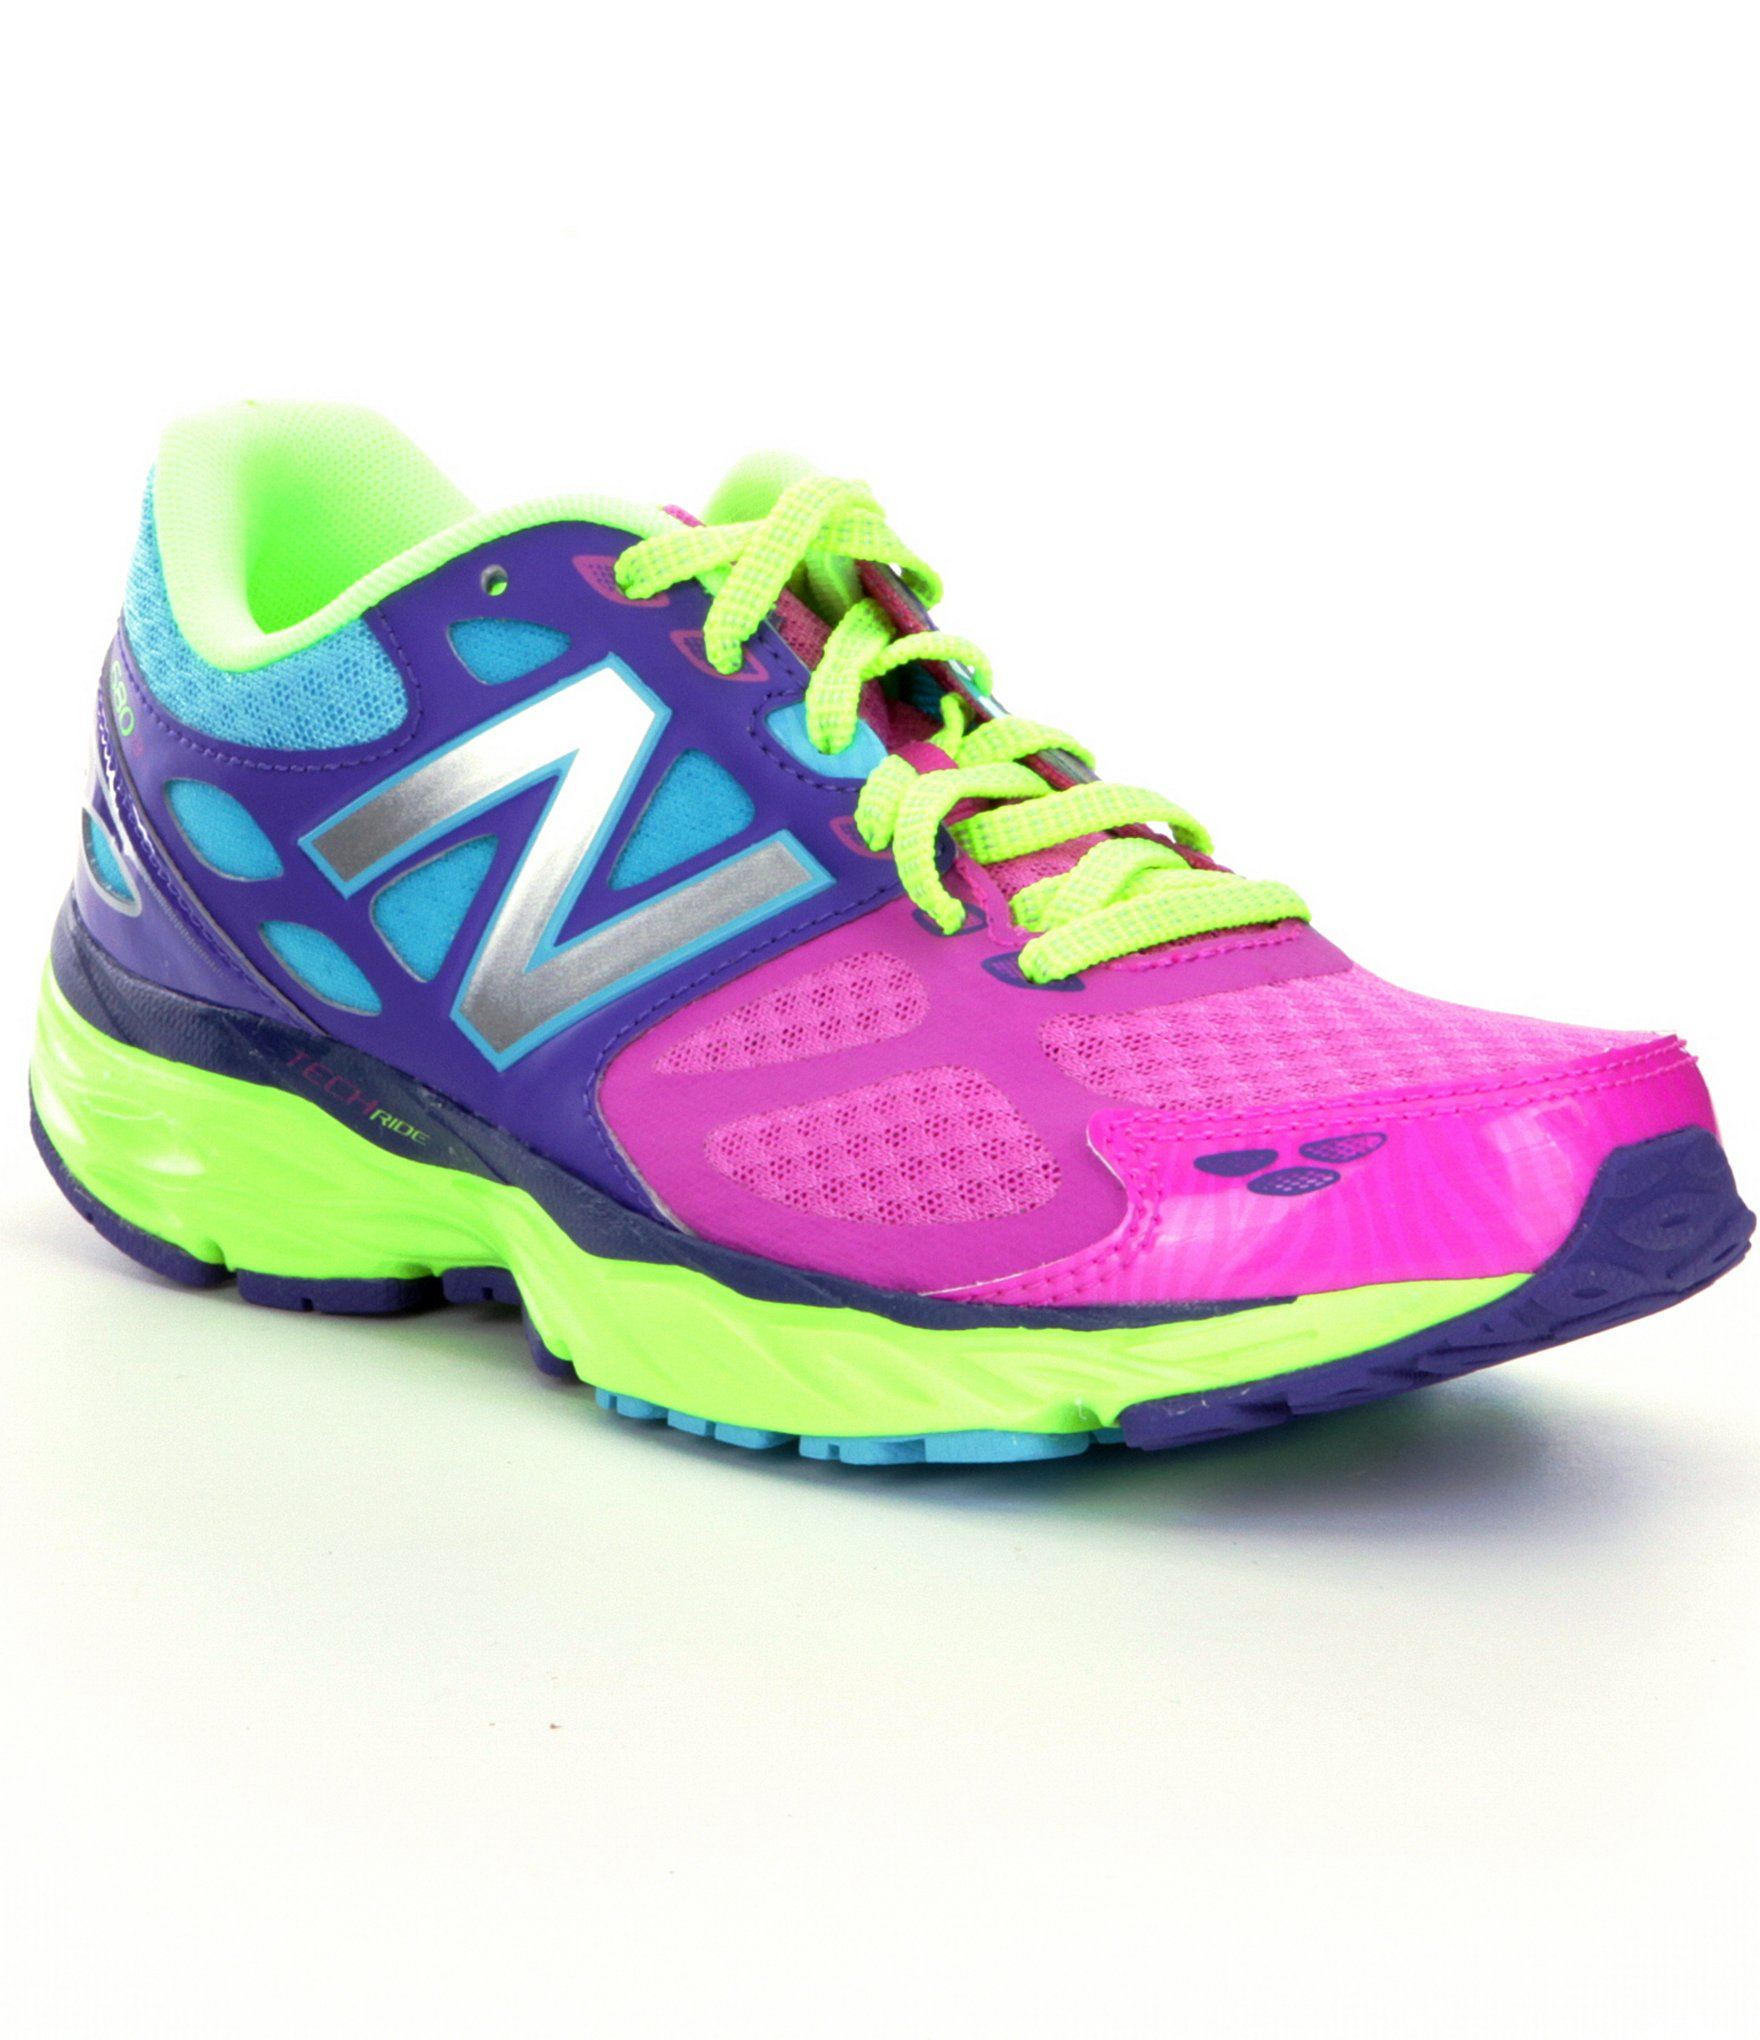 New Balance Women's 680 V3 Running Shoes - Lyst